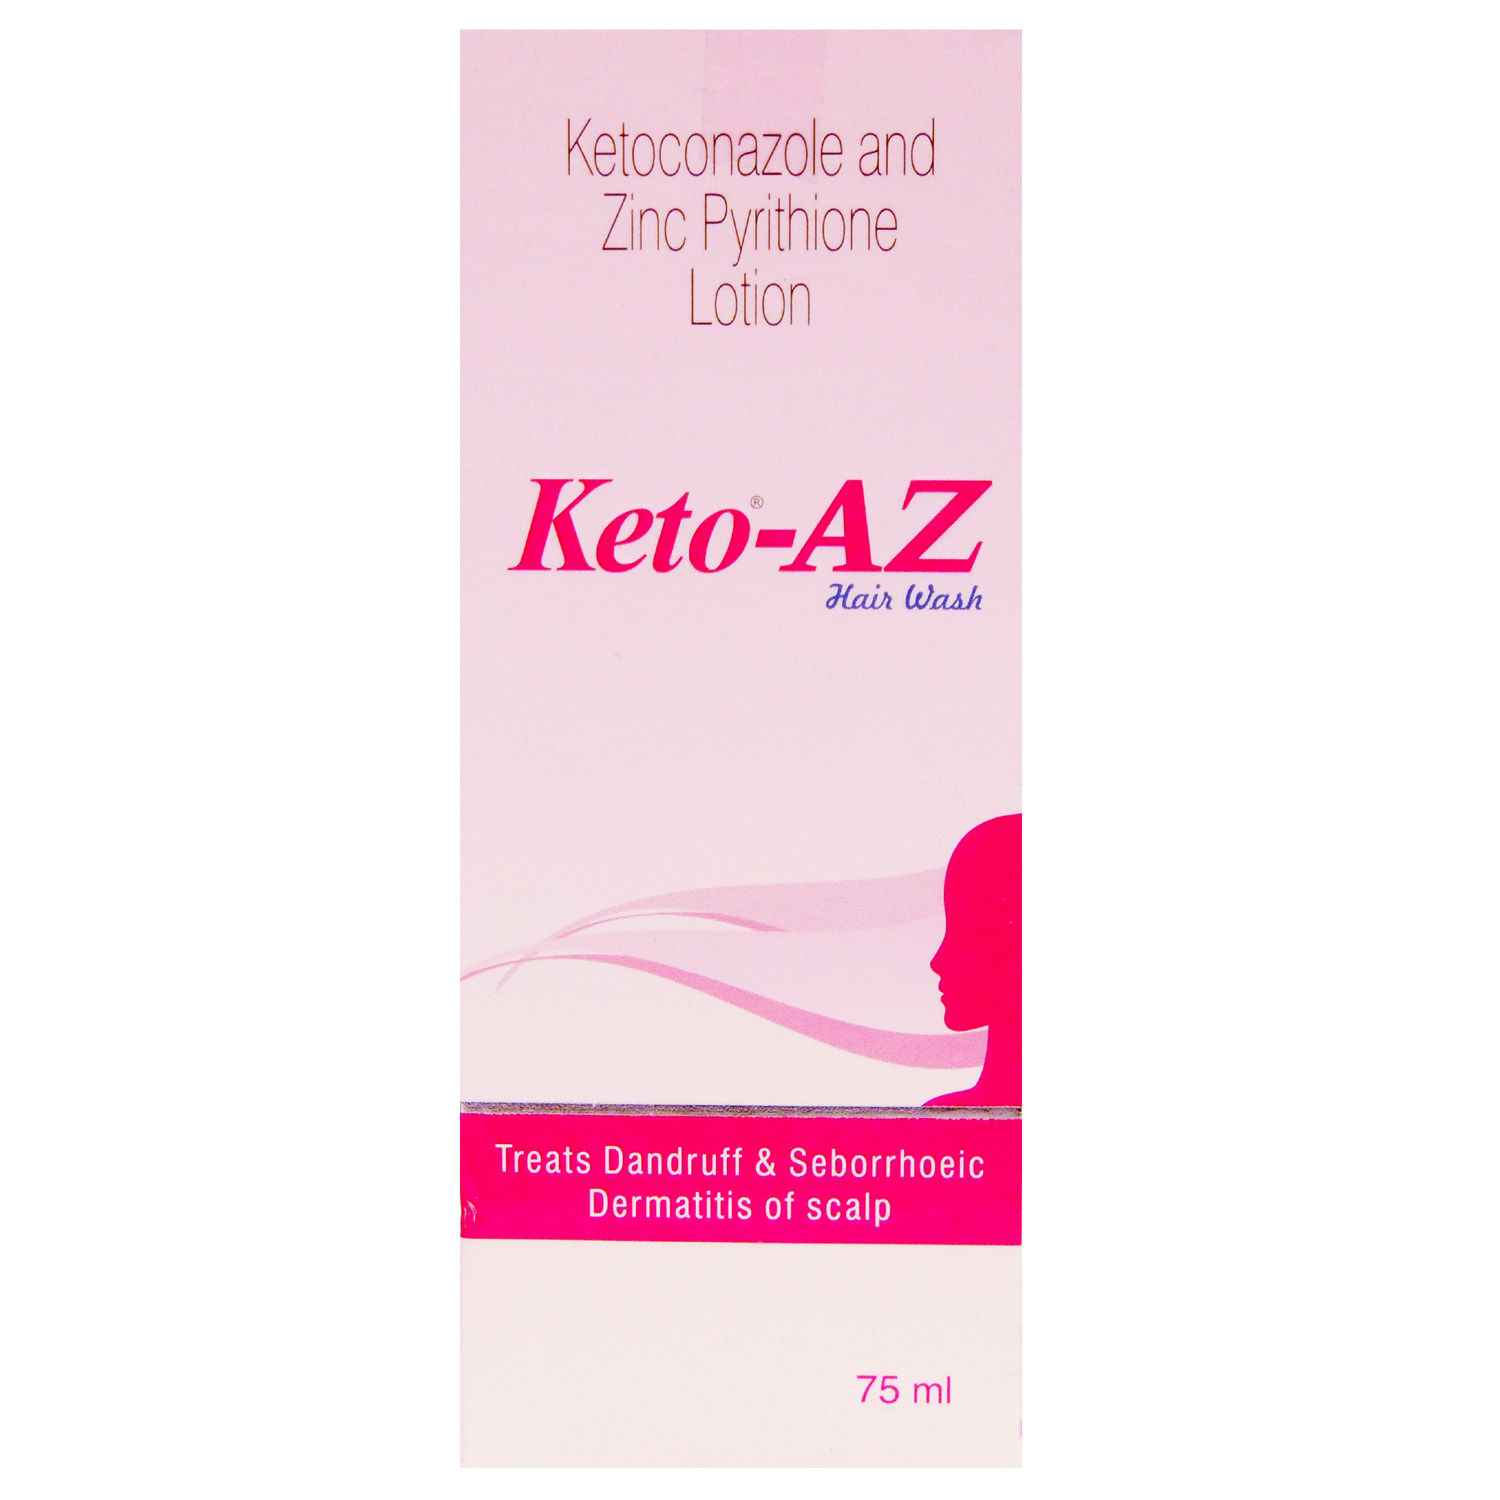 AZ Lotion, 75 ml Price, Uses, Effects, Composition - Apollo Pharmacy